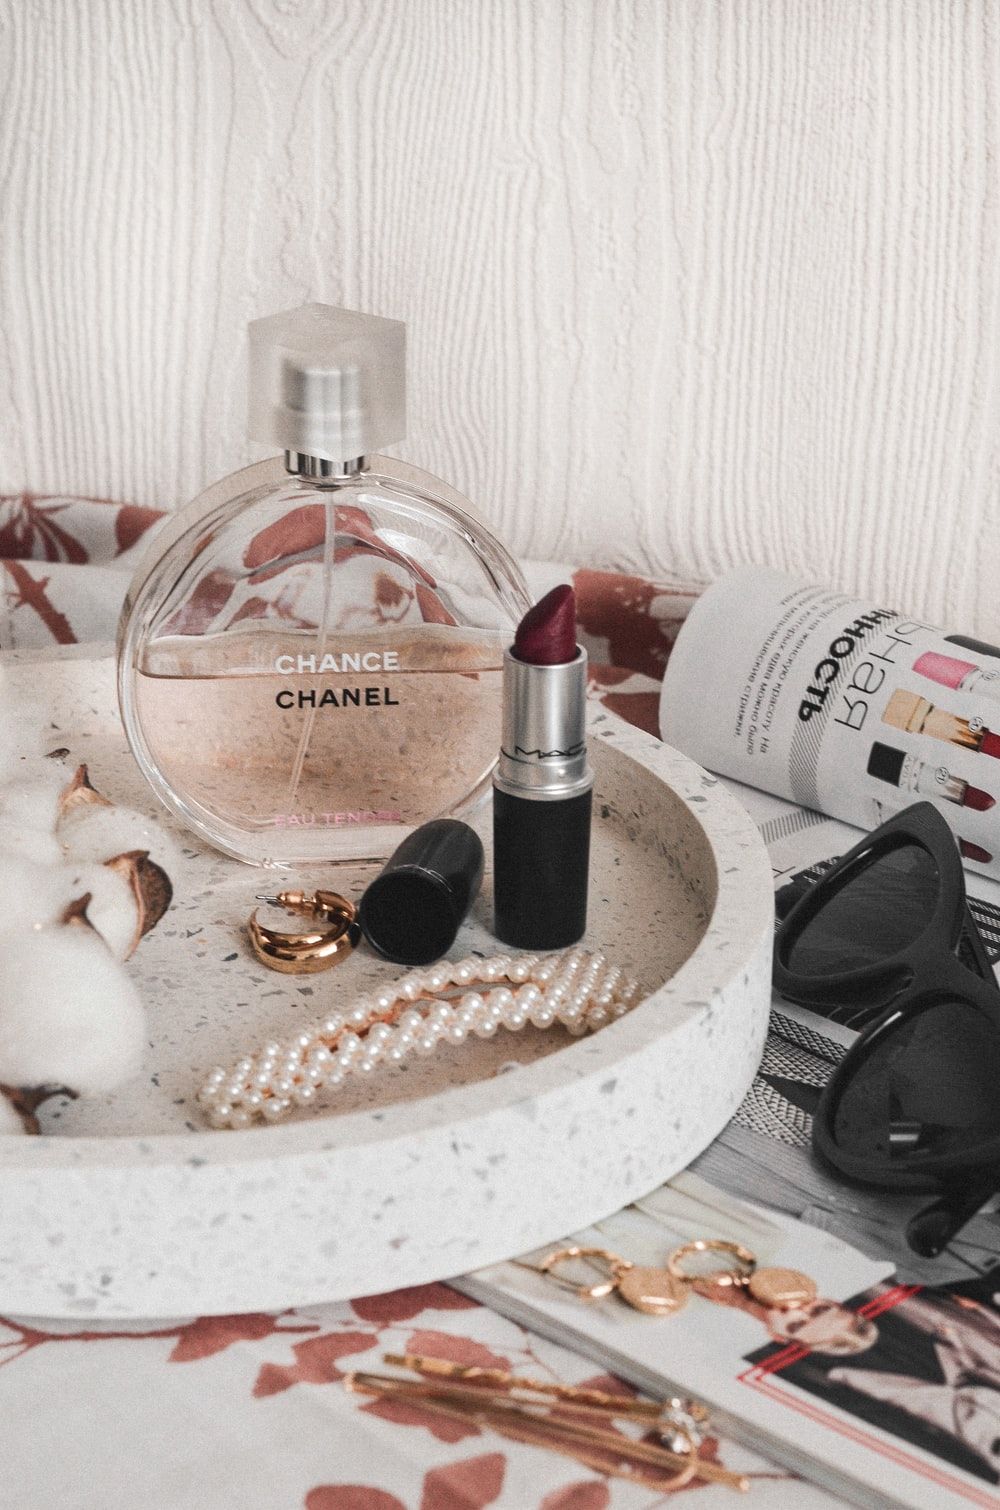 Chanel perfume bottle beside maroon lipstick photo